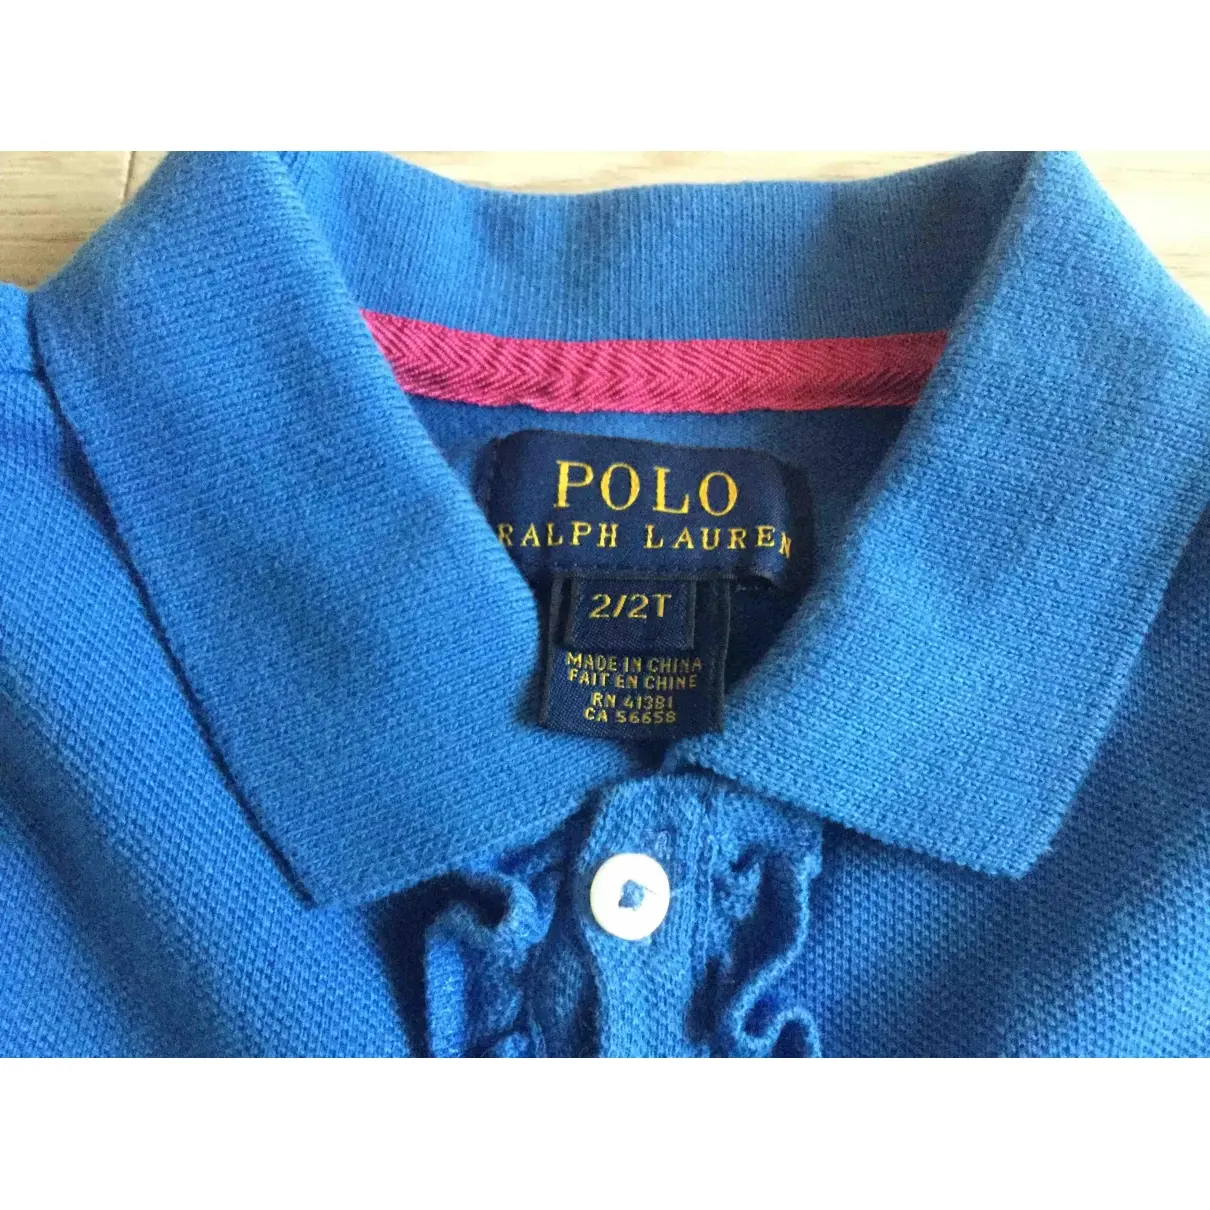 Buy Polo Ralph Lauren Polo online